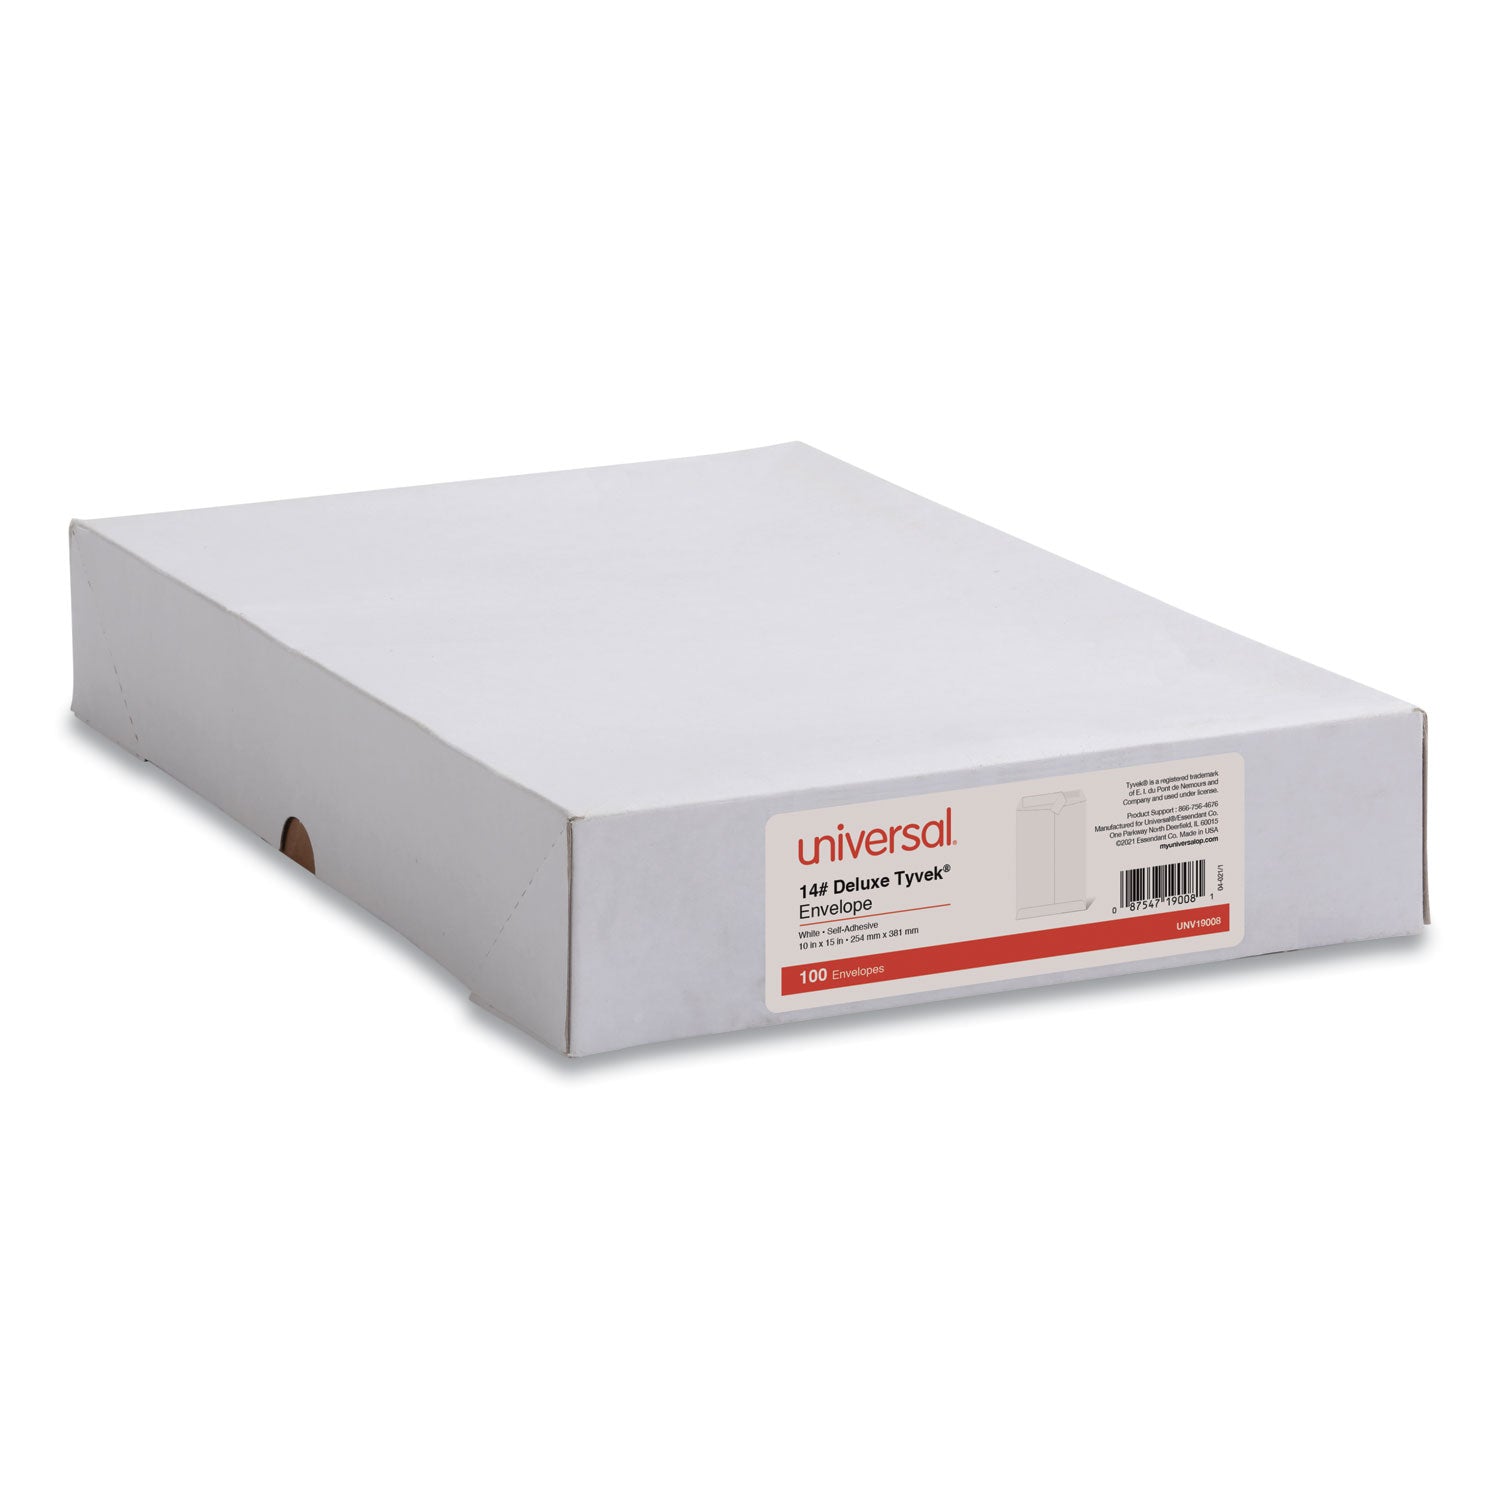 Deluxe Tyvek Envelopes, #15, Square Flap, Self-Adhesive Closure, 10 x 15, White, 100/Box - 